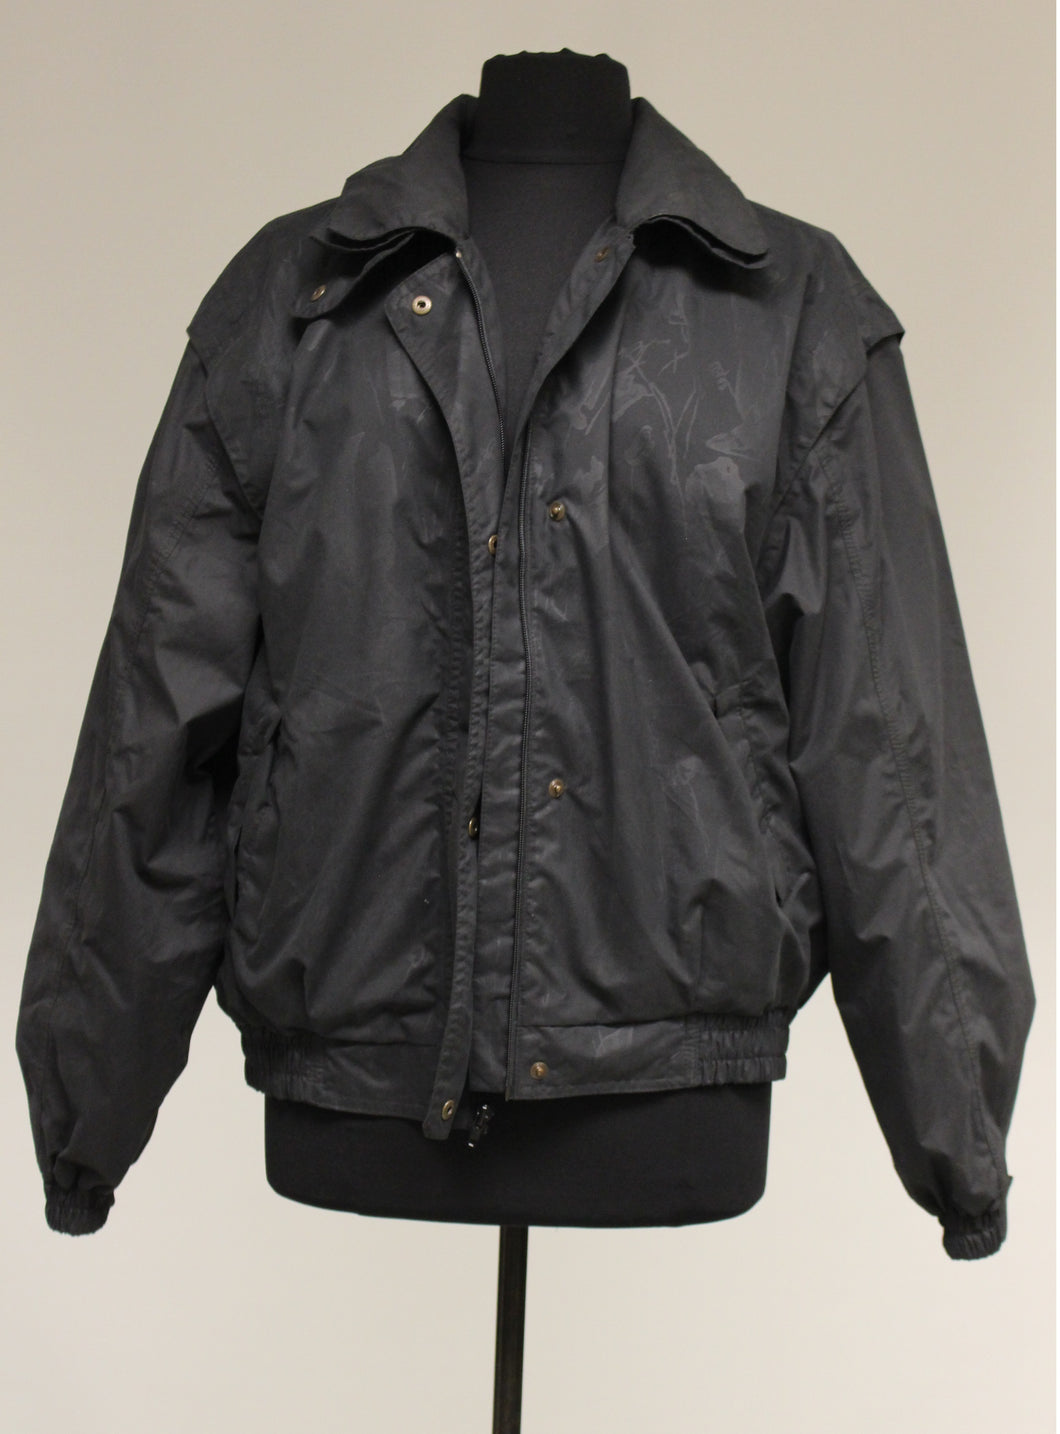 Haley Elements Coat, Size: Large, Black